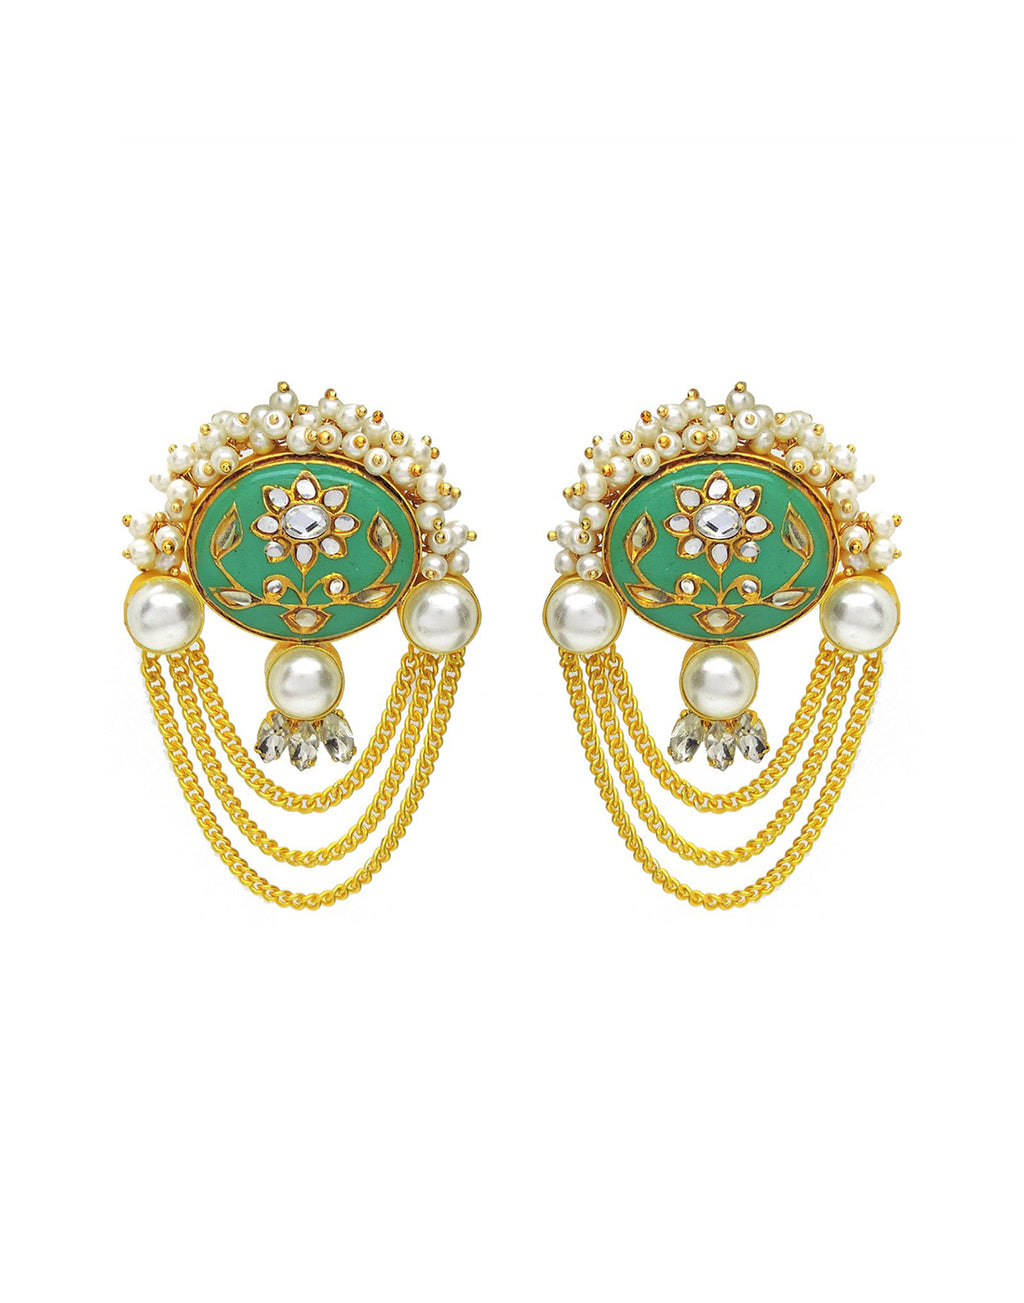 Kundan Chain Earrings - Statement Earrings - Gold-Plated & Hypoallergenic Jewellery - Made in India - Dubai Jewellery - Dori